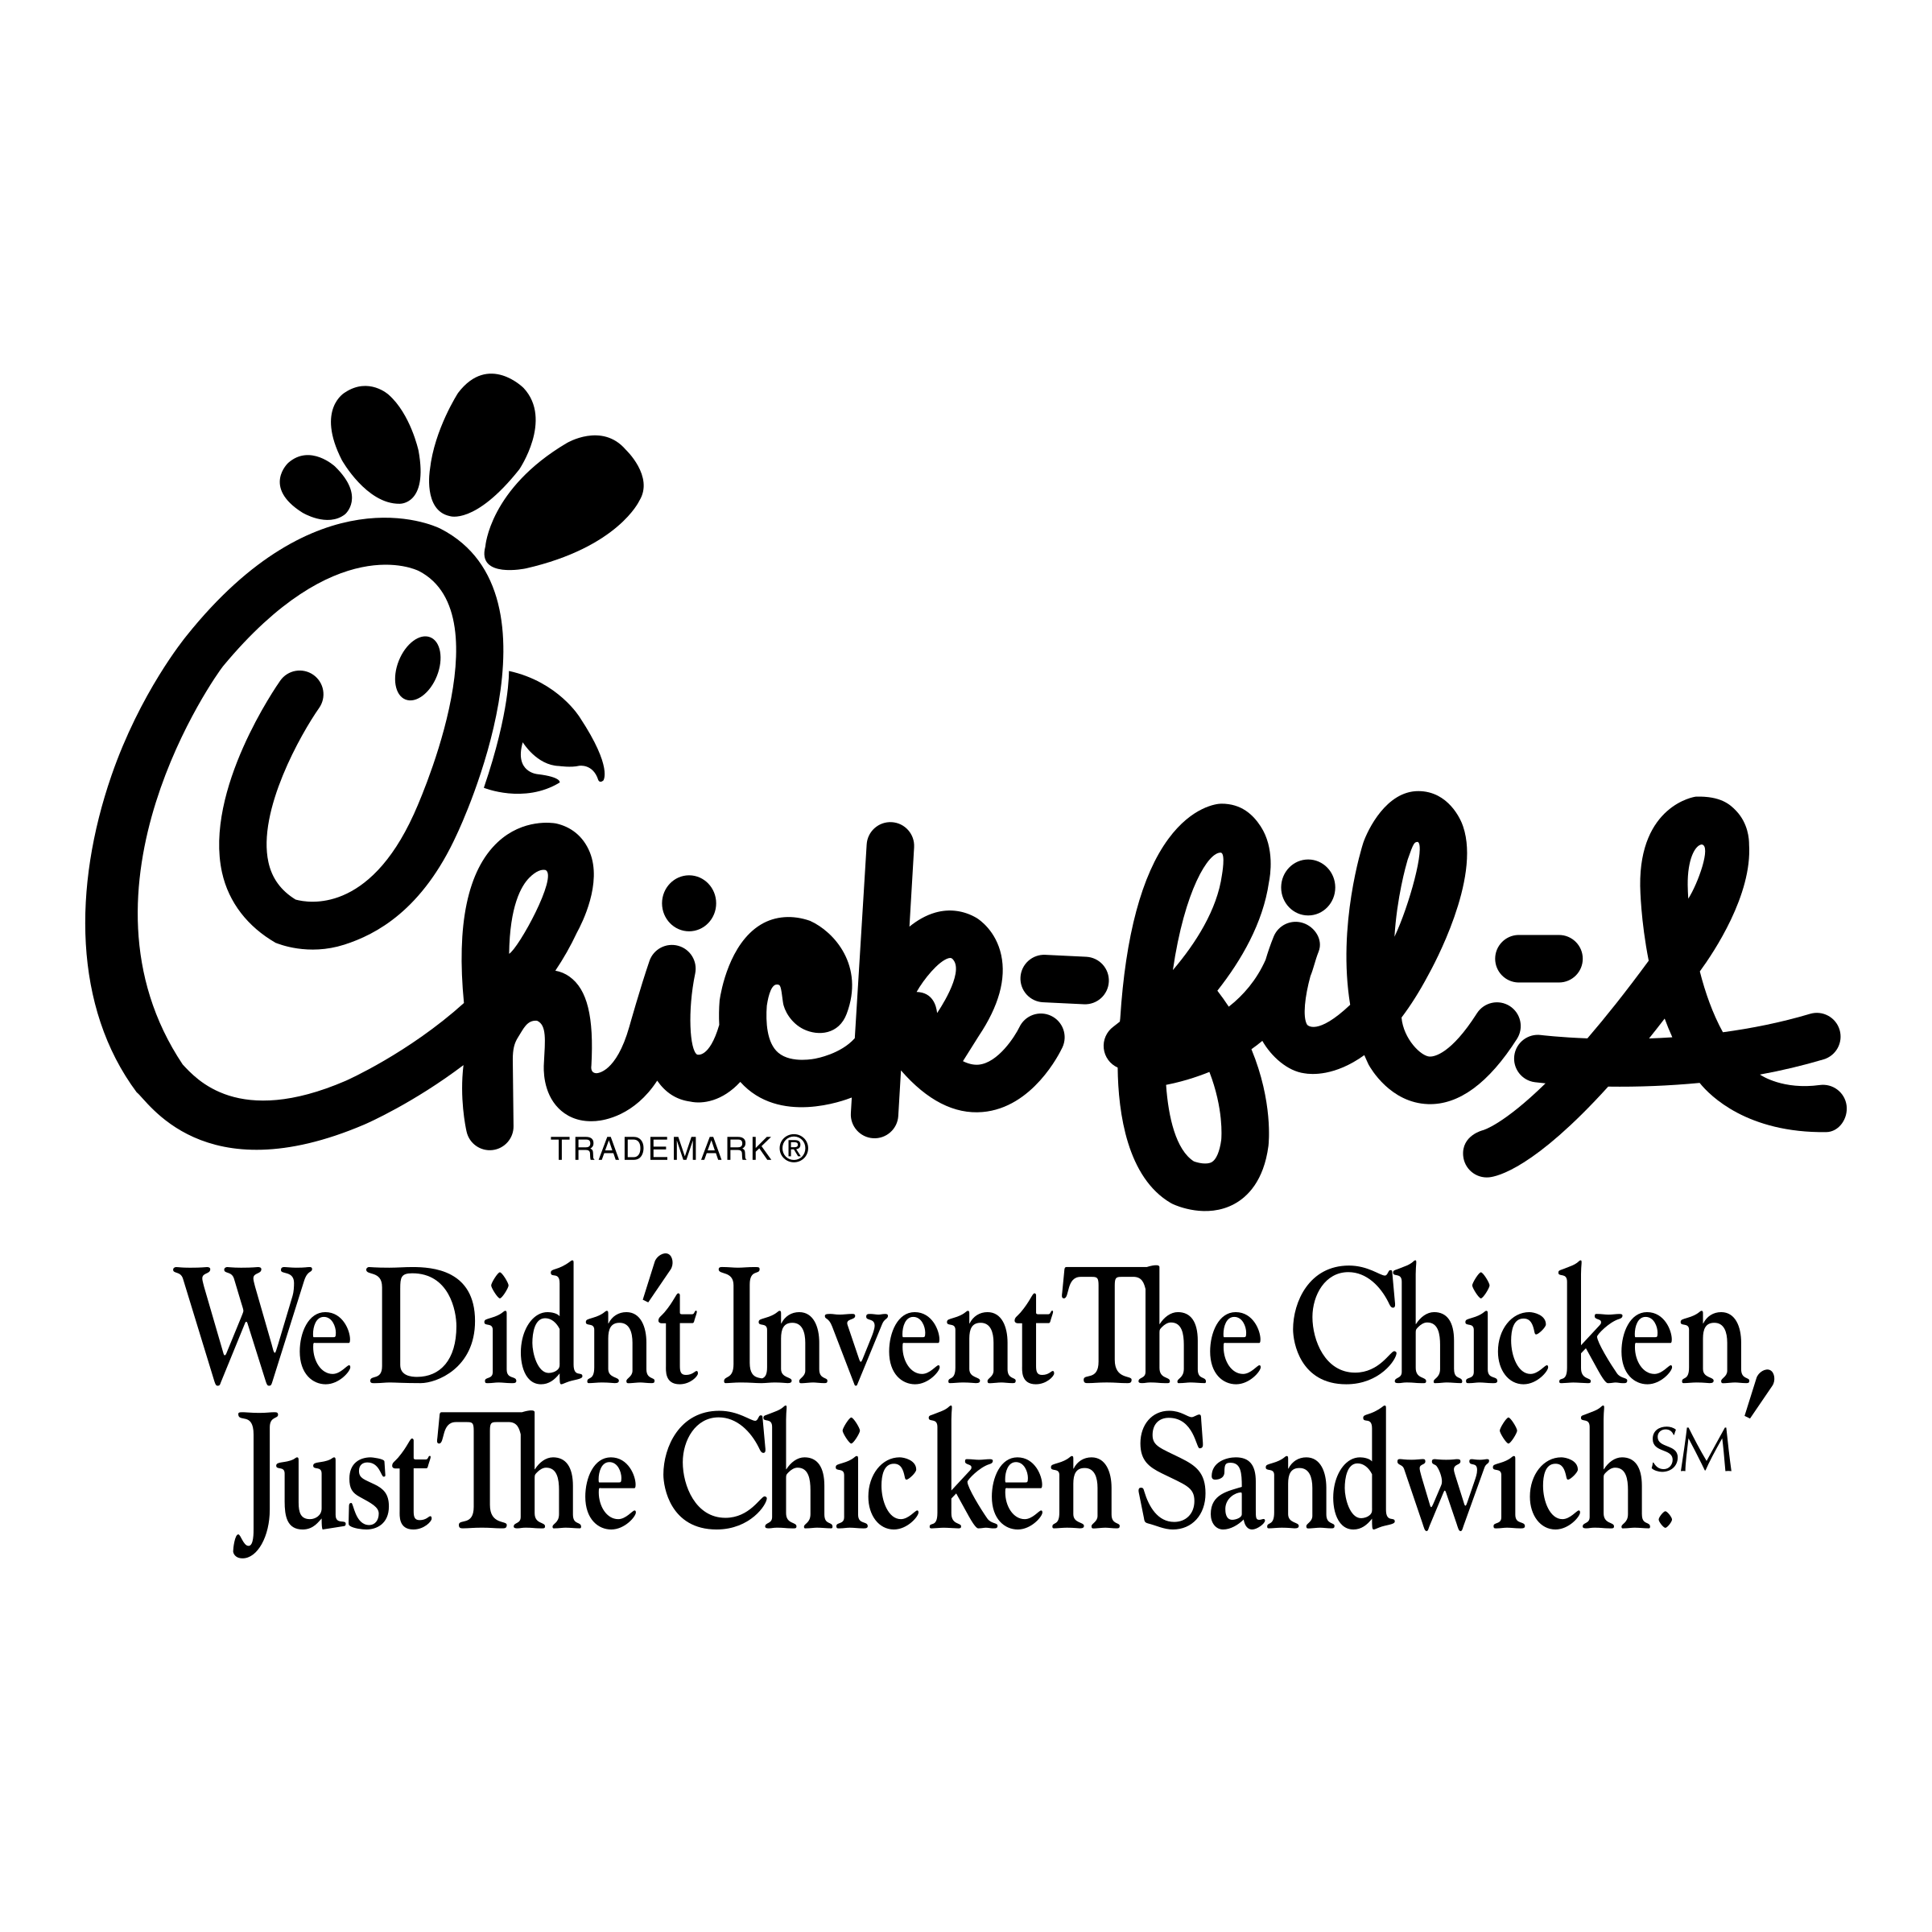 Chckfila Logo - Chick fil A Logo PNG Transparent & SVG Vector - Freebie Supply